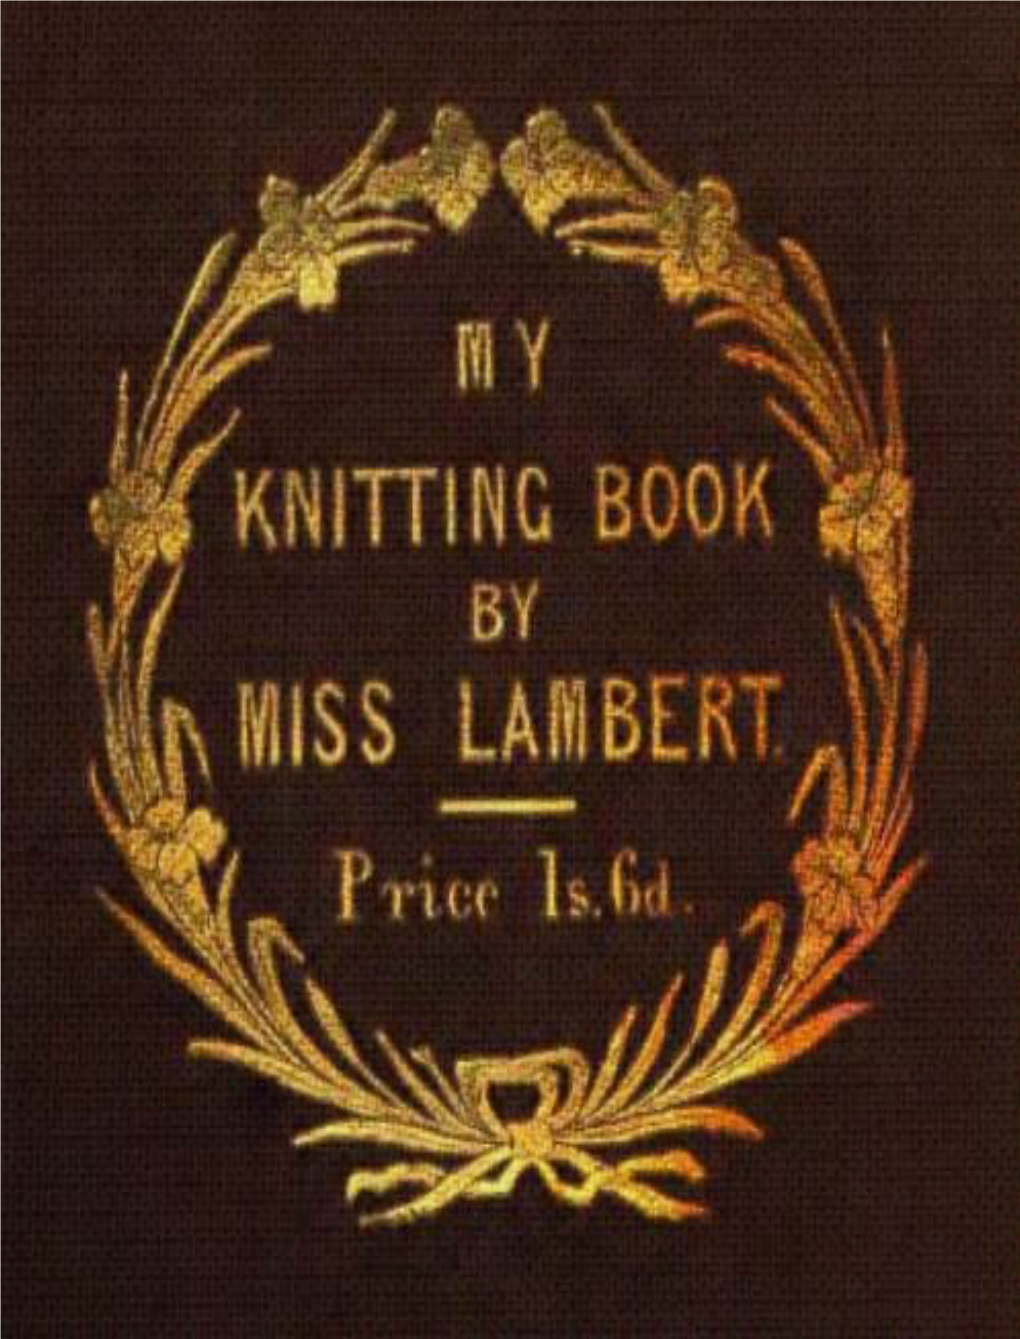 My Knitting Book by Miss Lambert